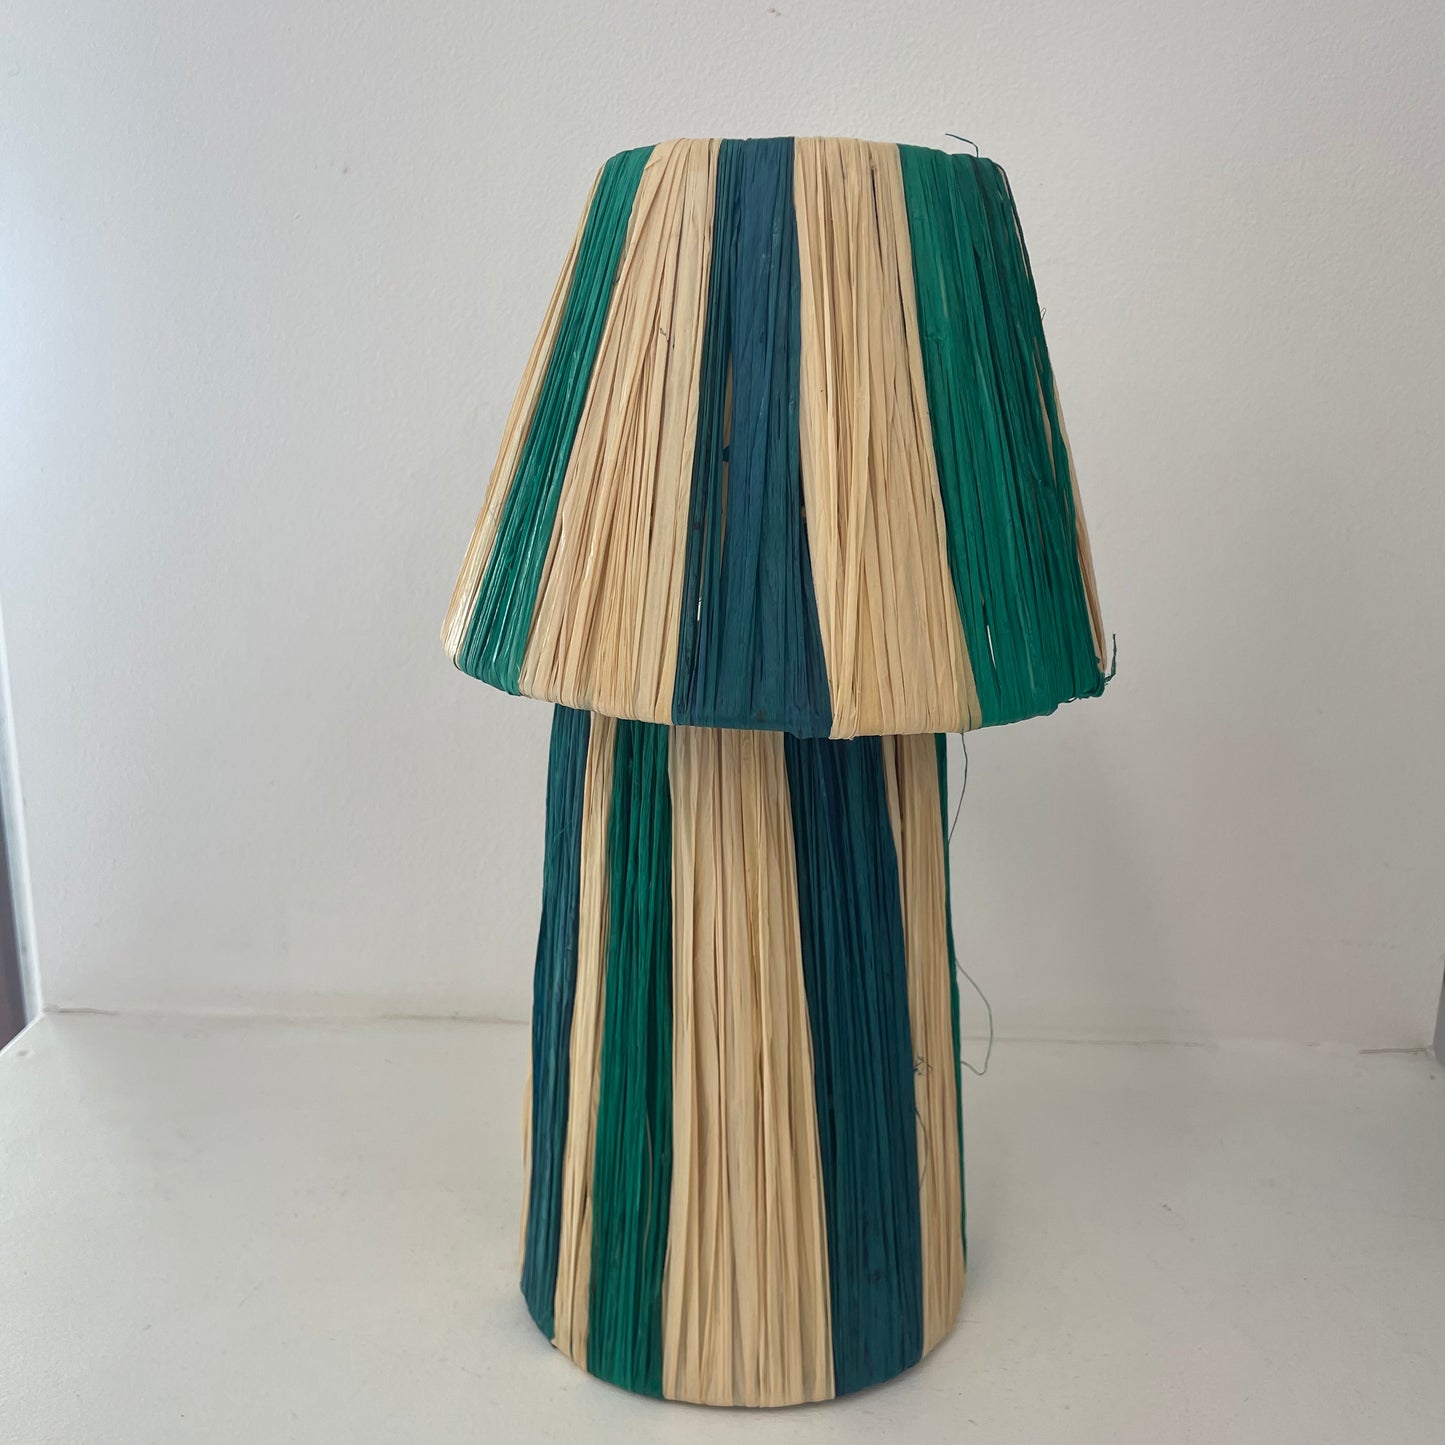 Raffia Lamp, Series 2 - Blue, Green, & Natural, Small